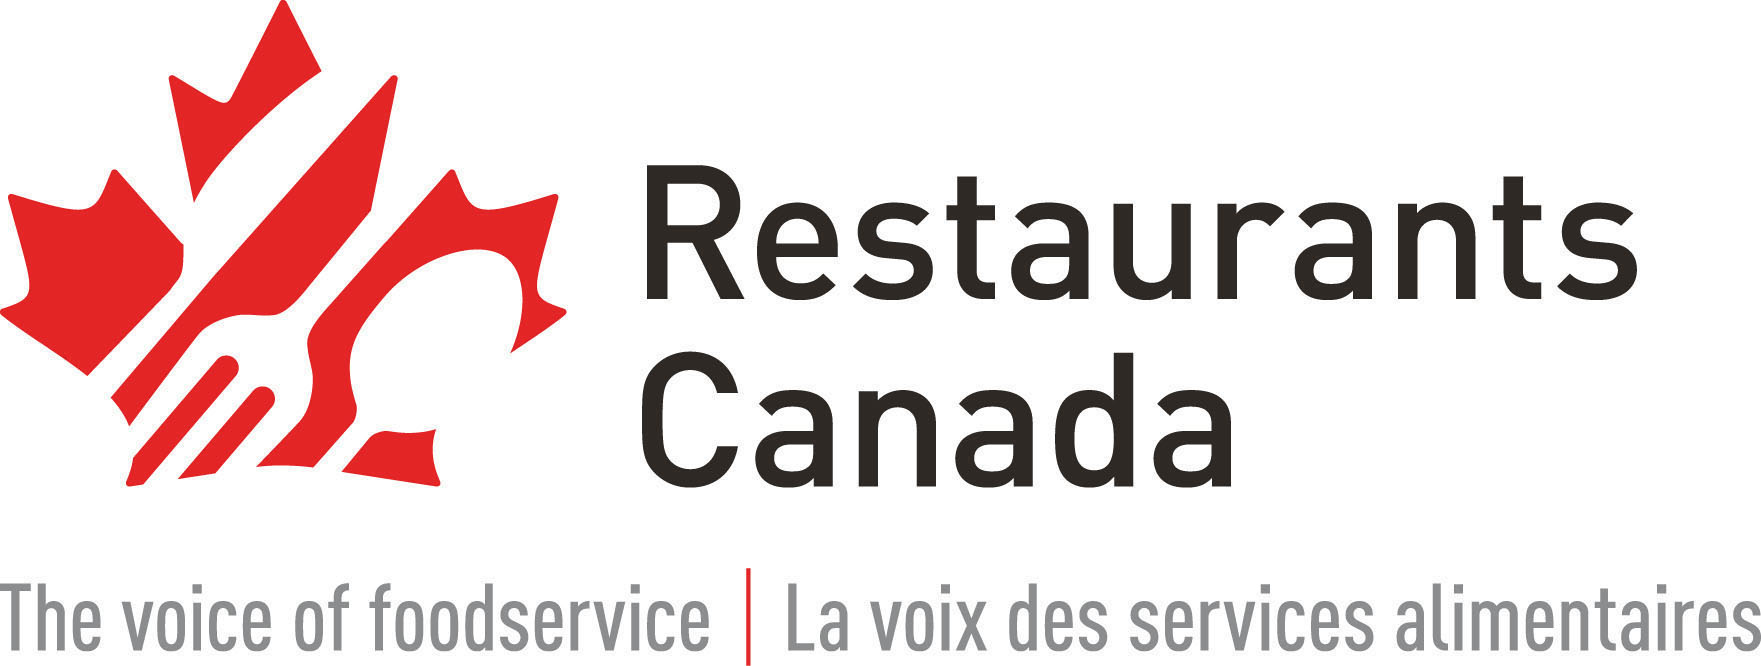 Restaurants Canada 2